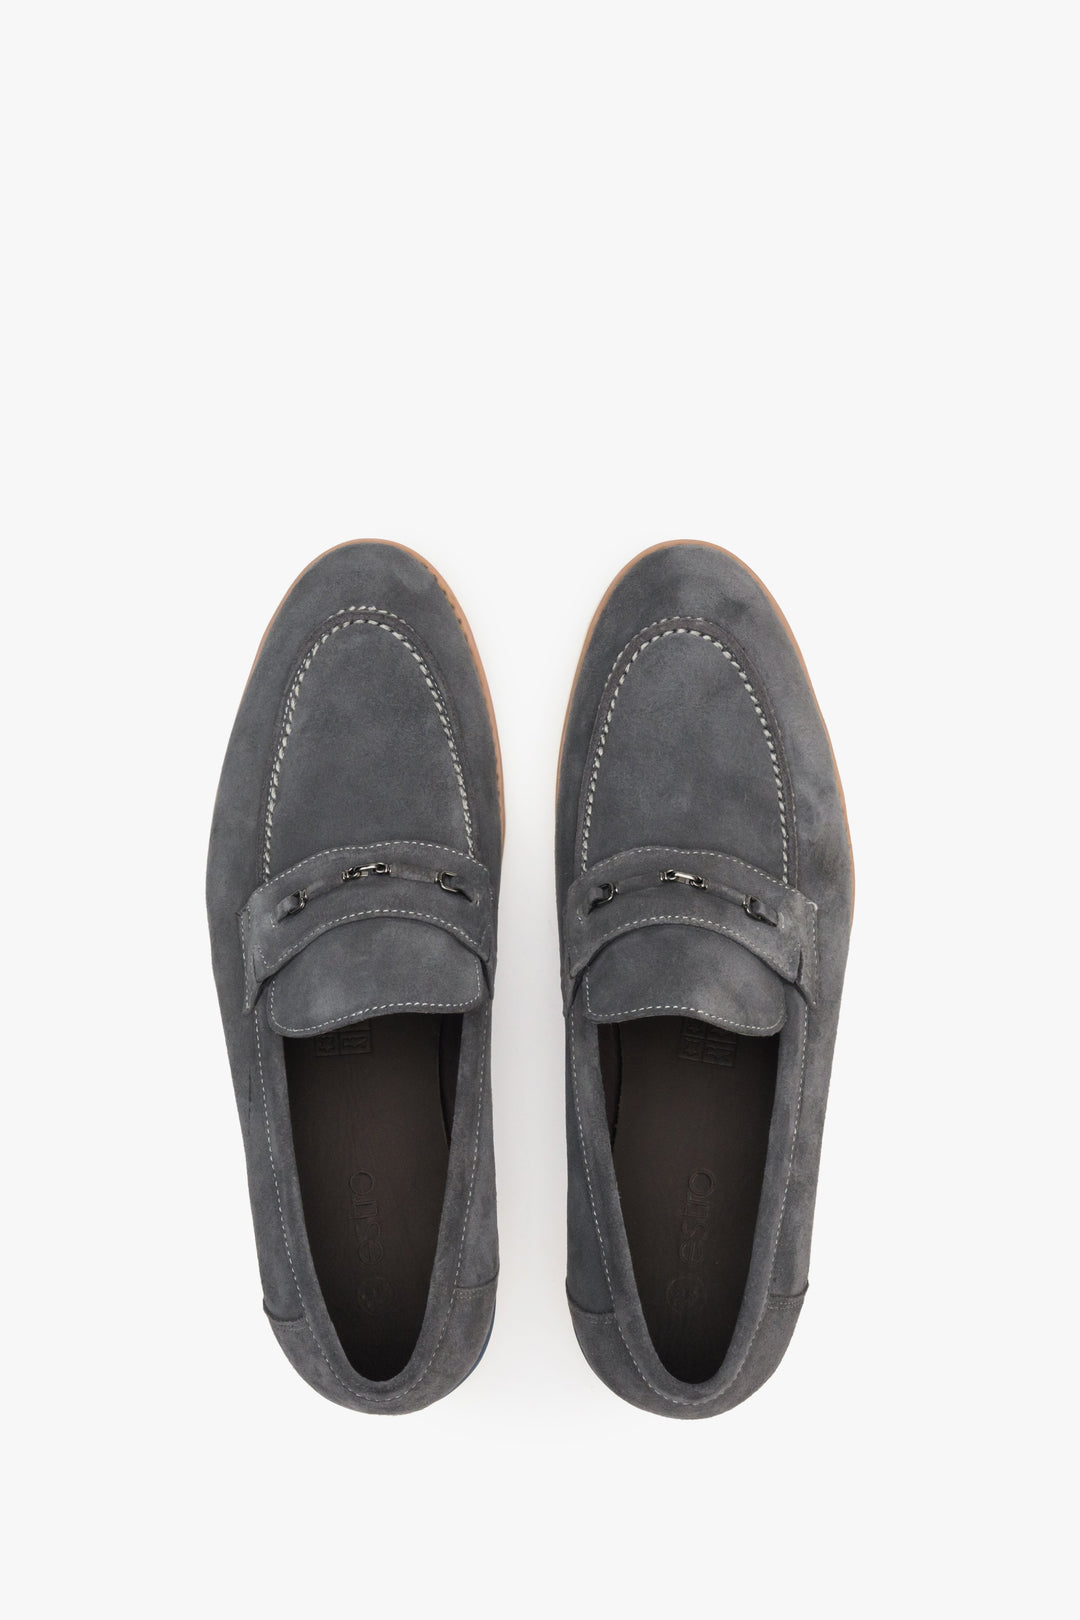 Grey velour men's loafers by Estro - top view model presentation.